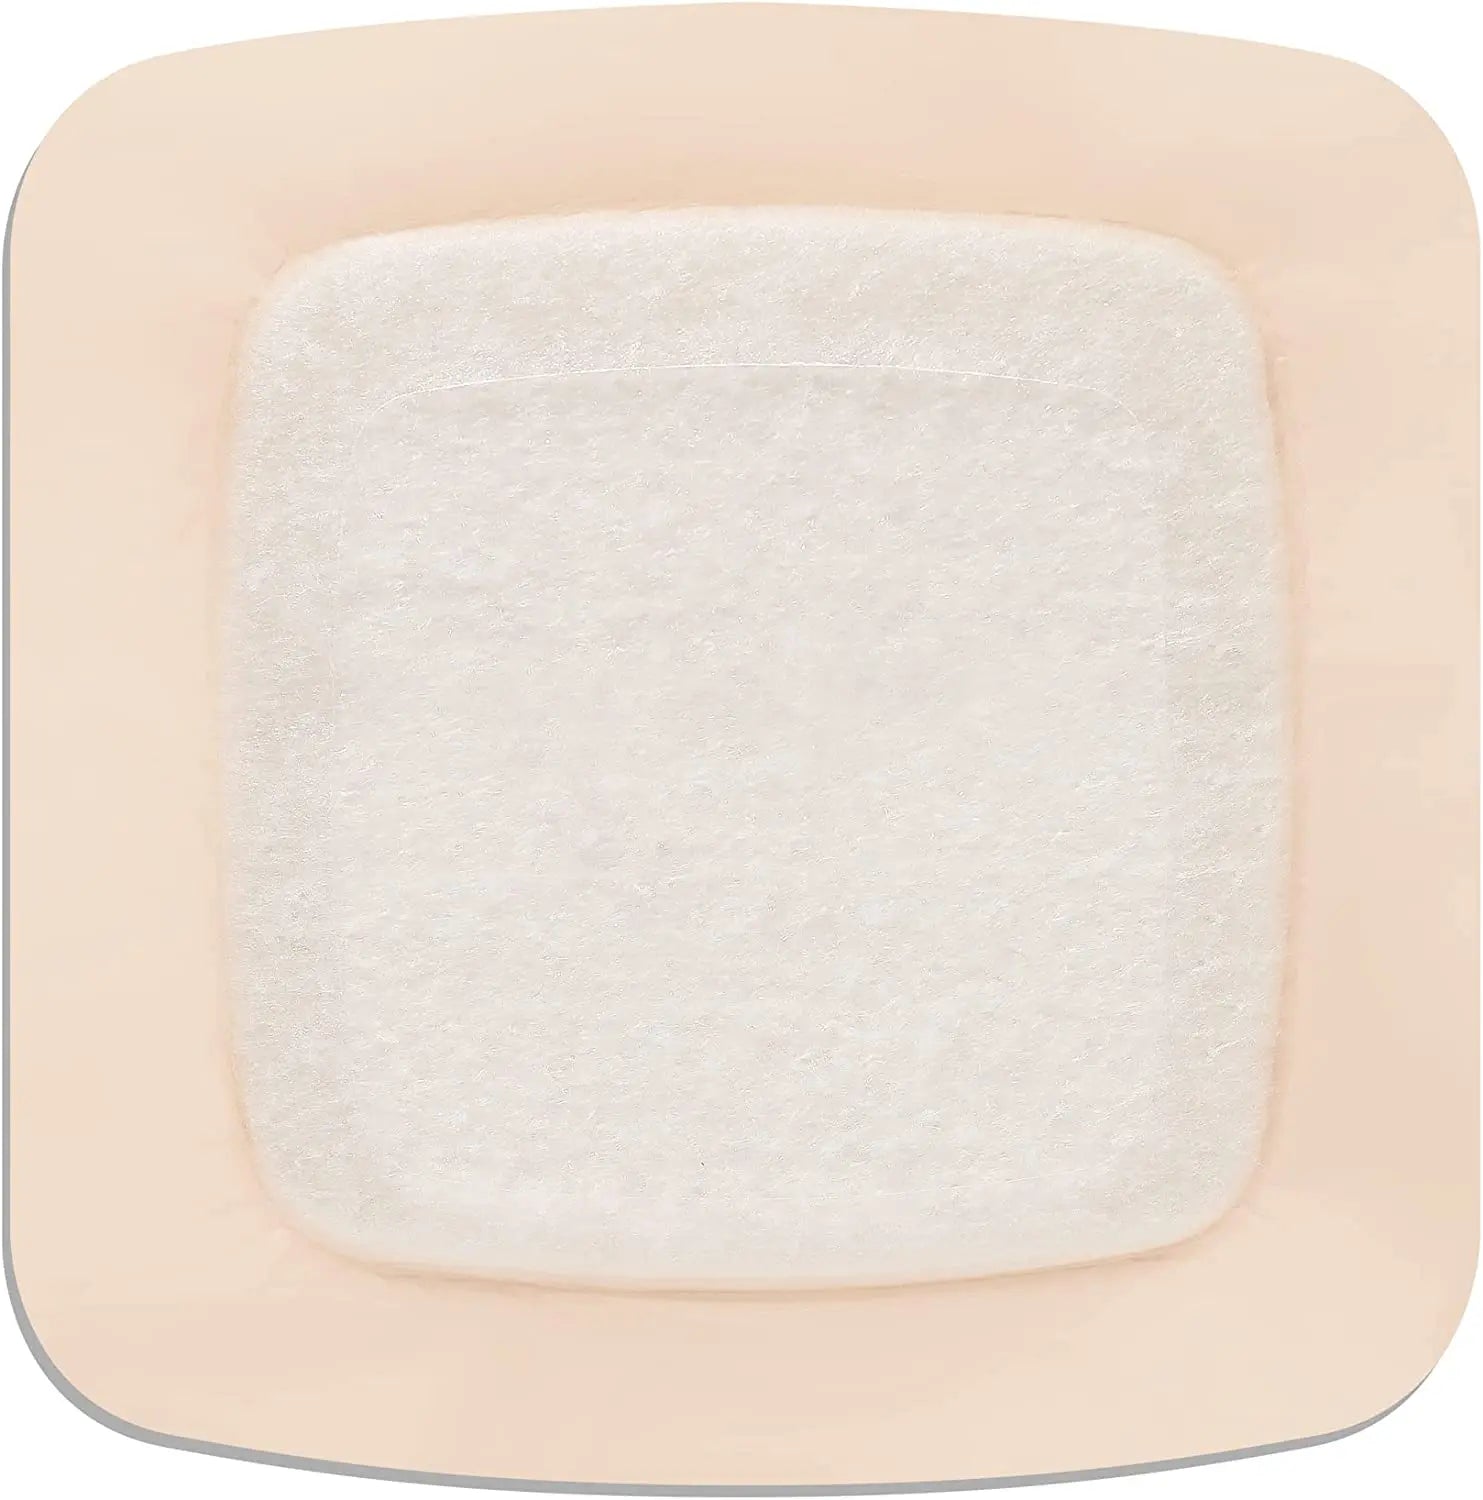 Aquacel Foam Adhesive Dressing, Sterile 17.5cm X 17.5cm - Box Of 10 - Home Health Store Inc